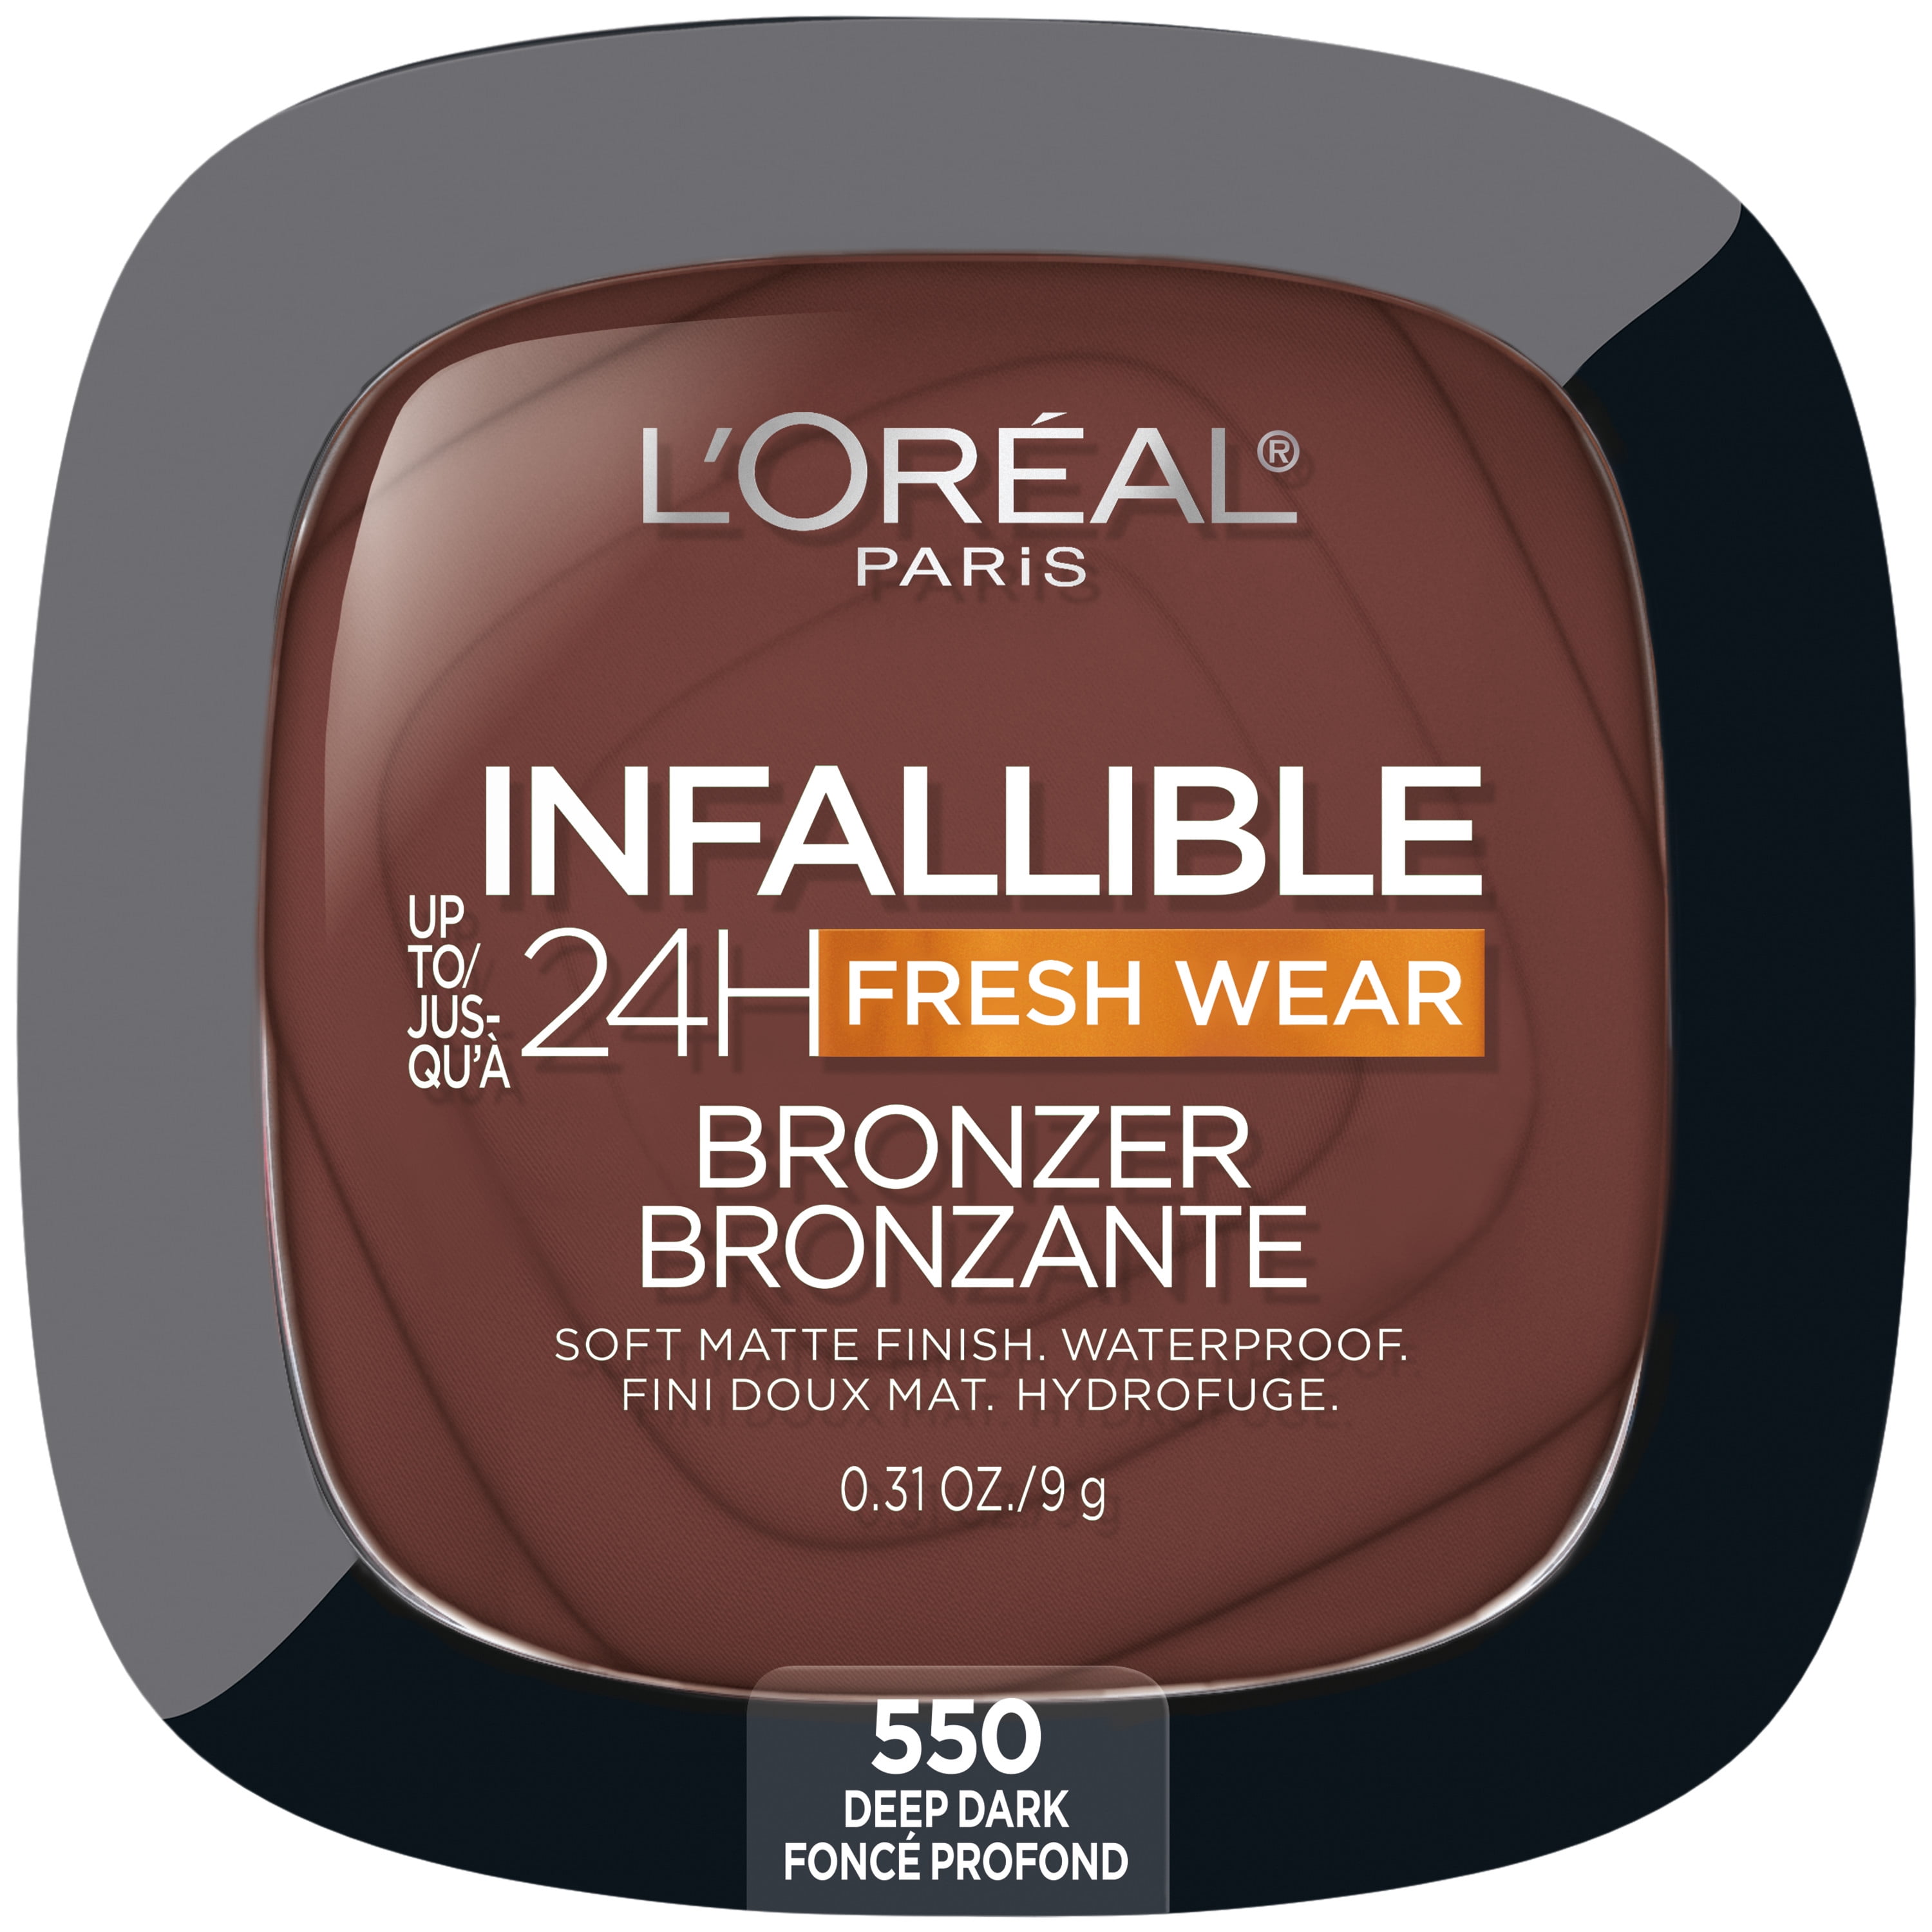 L'Oreal Paris Infallible Up to 24H Fresh Wear Soft Matte Bronzer, Deep Dark, 0.31 oz